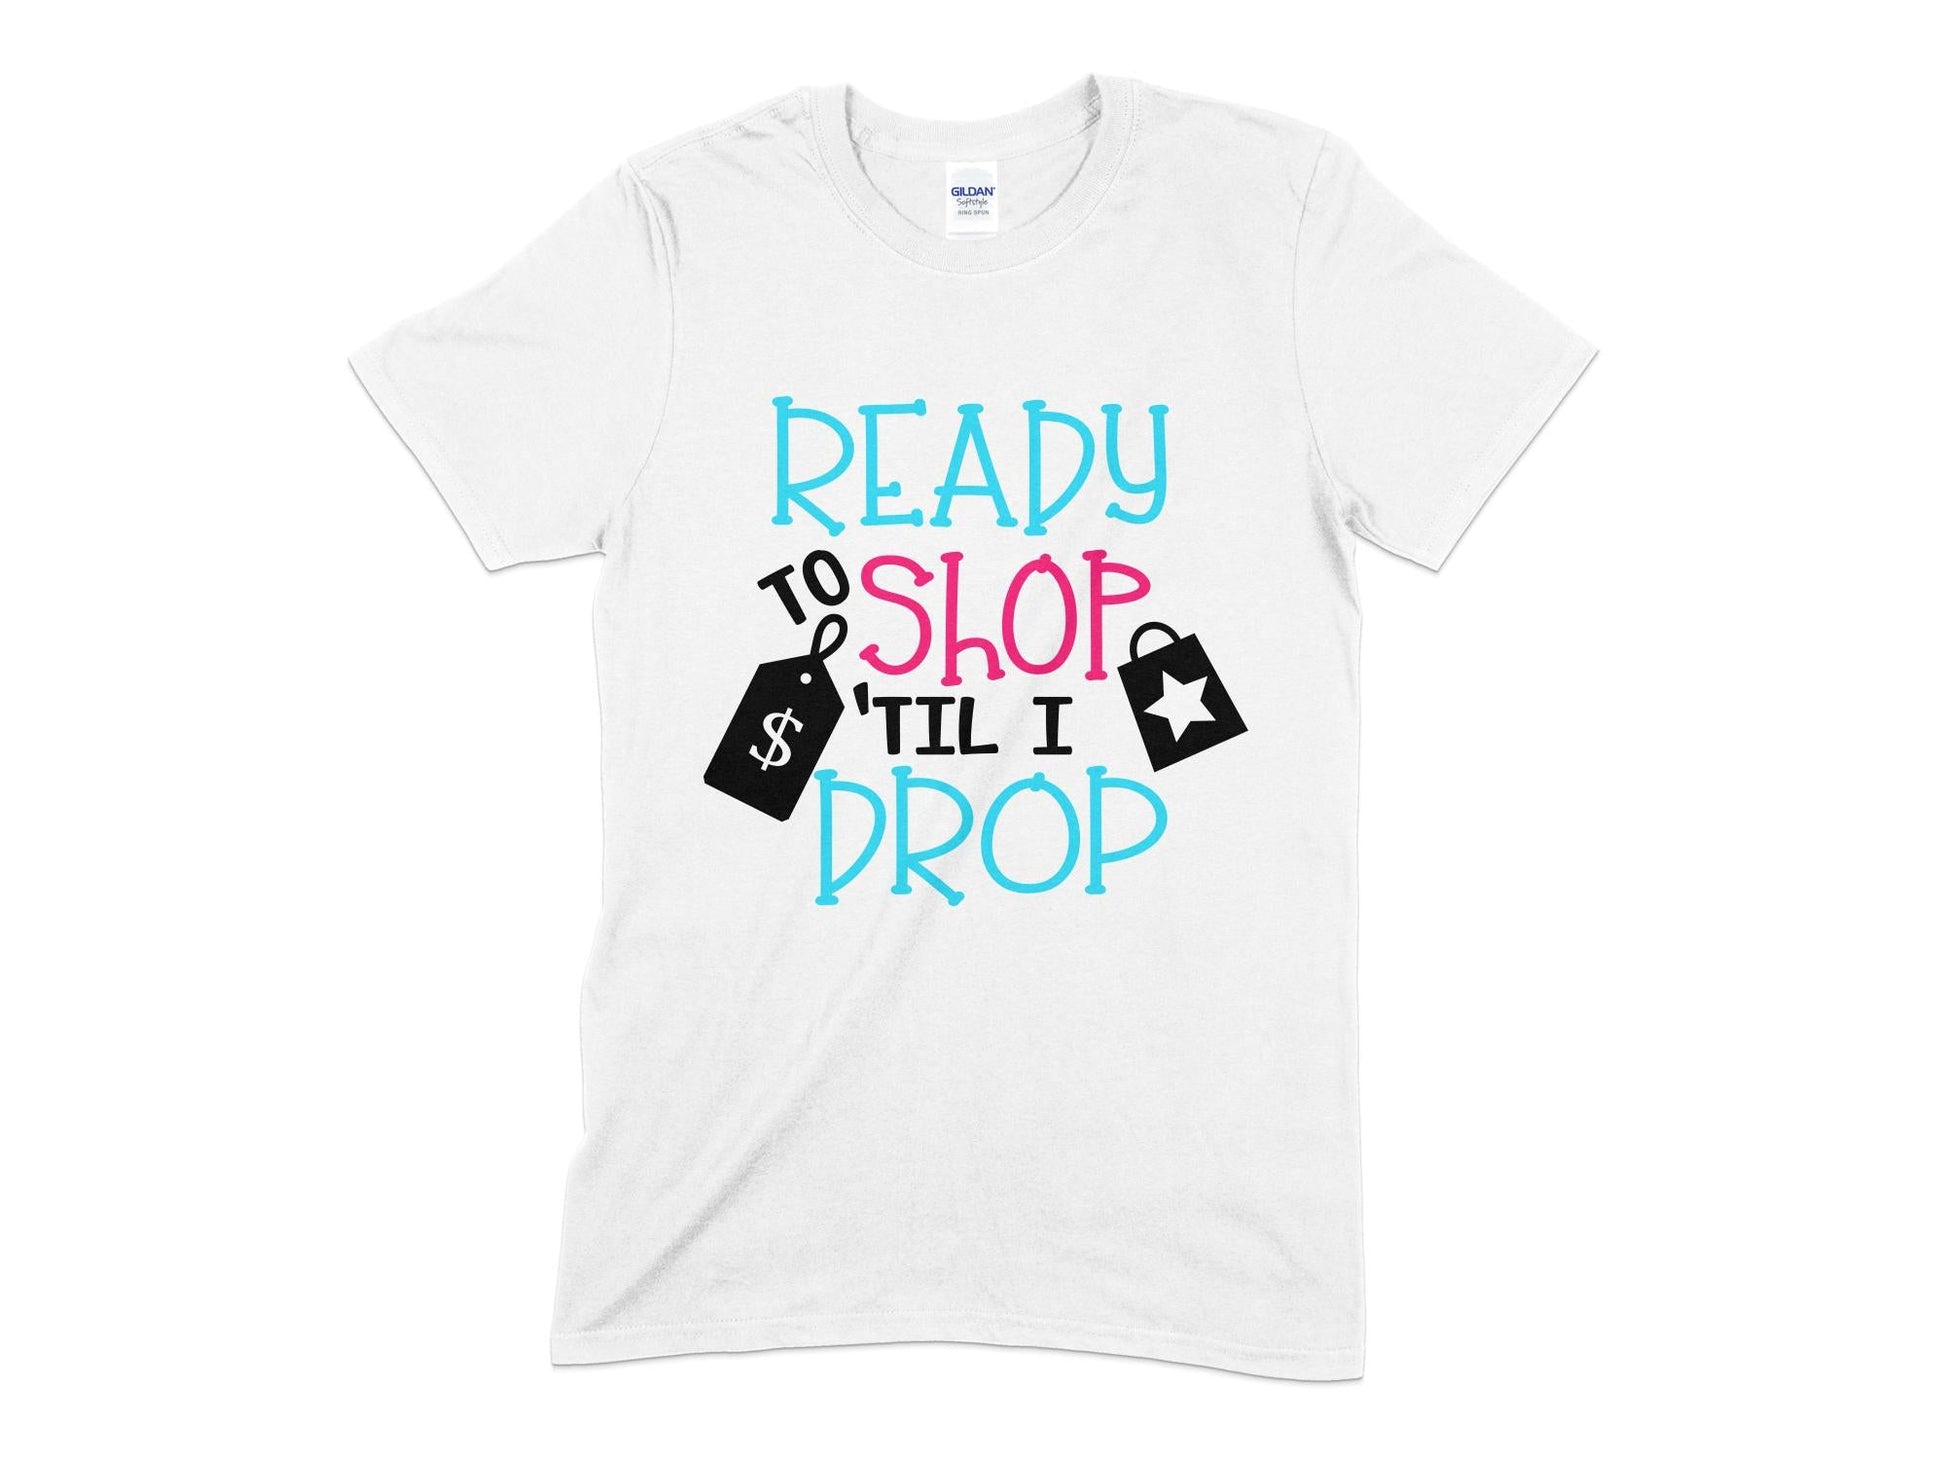 Shop Til Drop womens t-shirt - Premium t-shirt from MyDesigns - Just $19.95! Shop now at Lees Krazy Teez